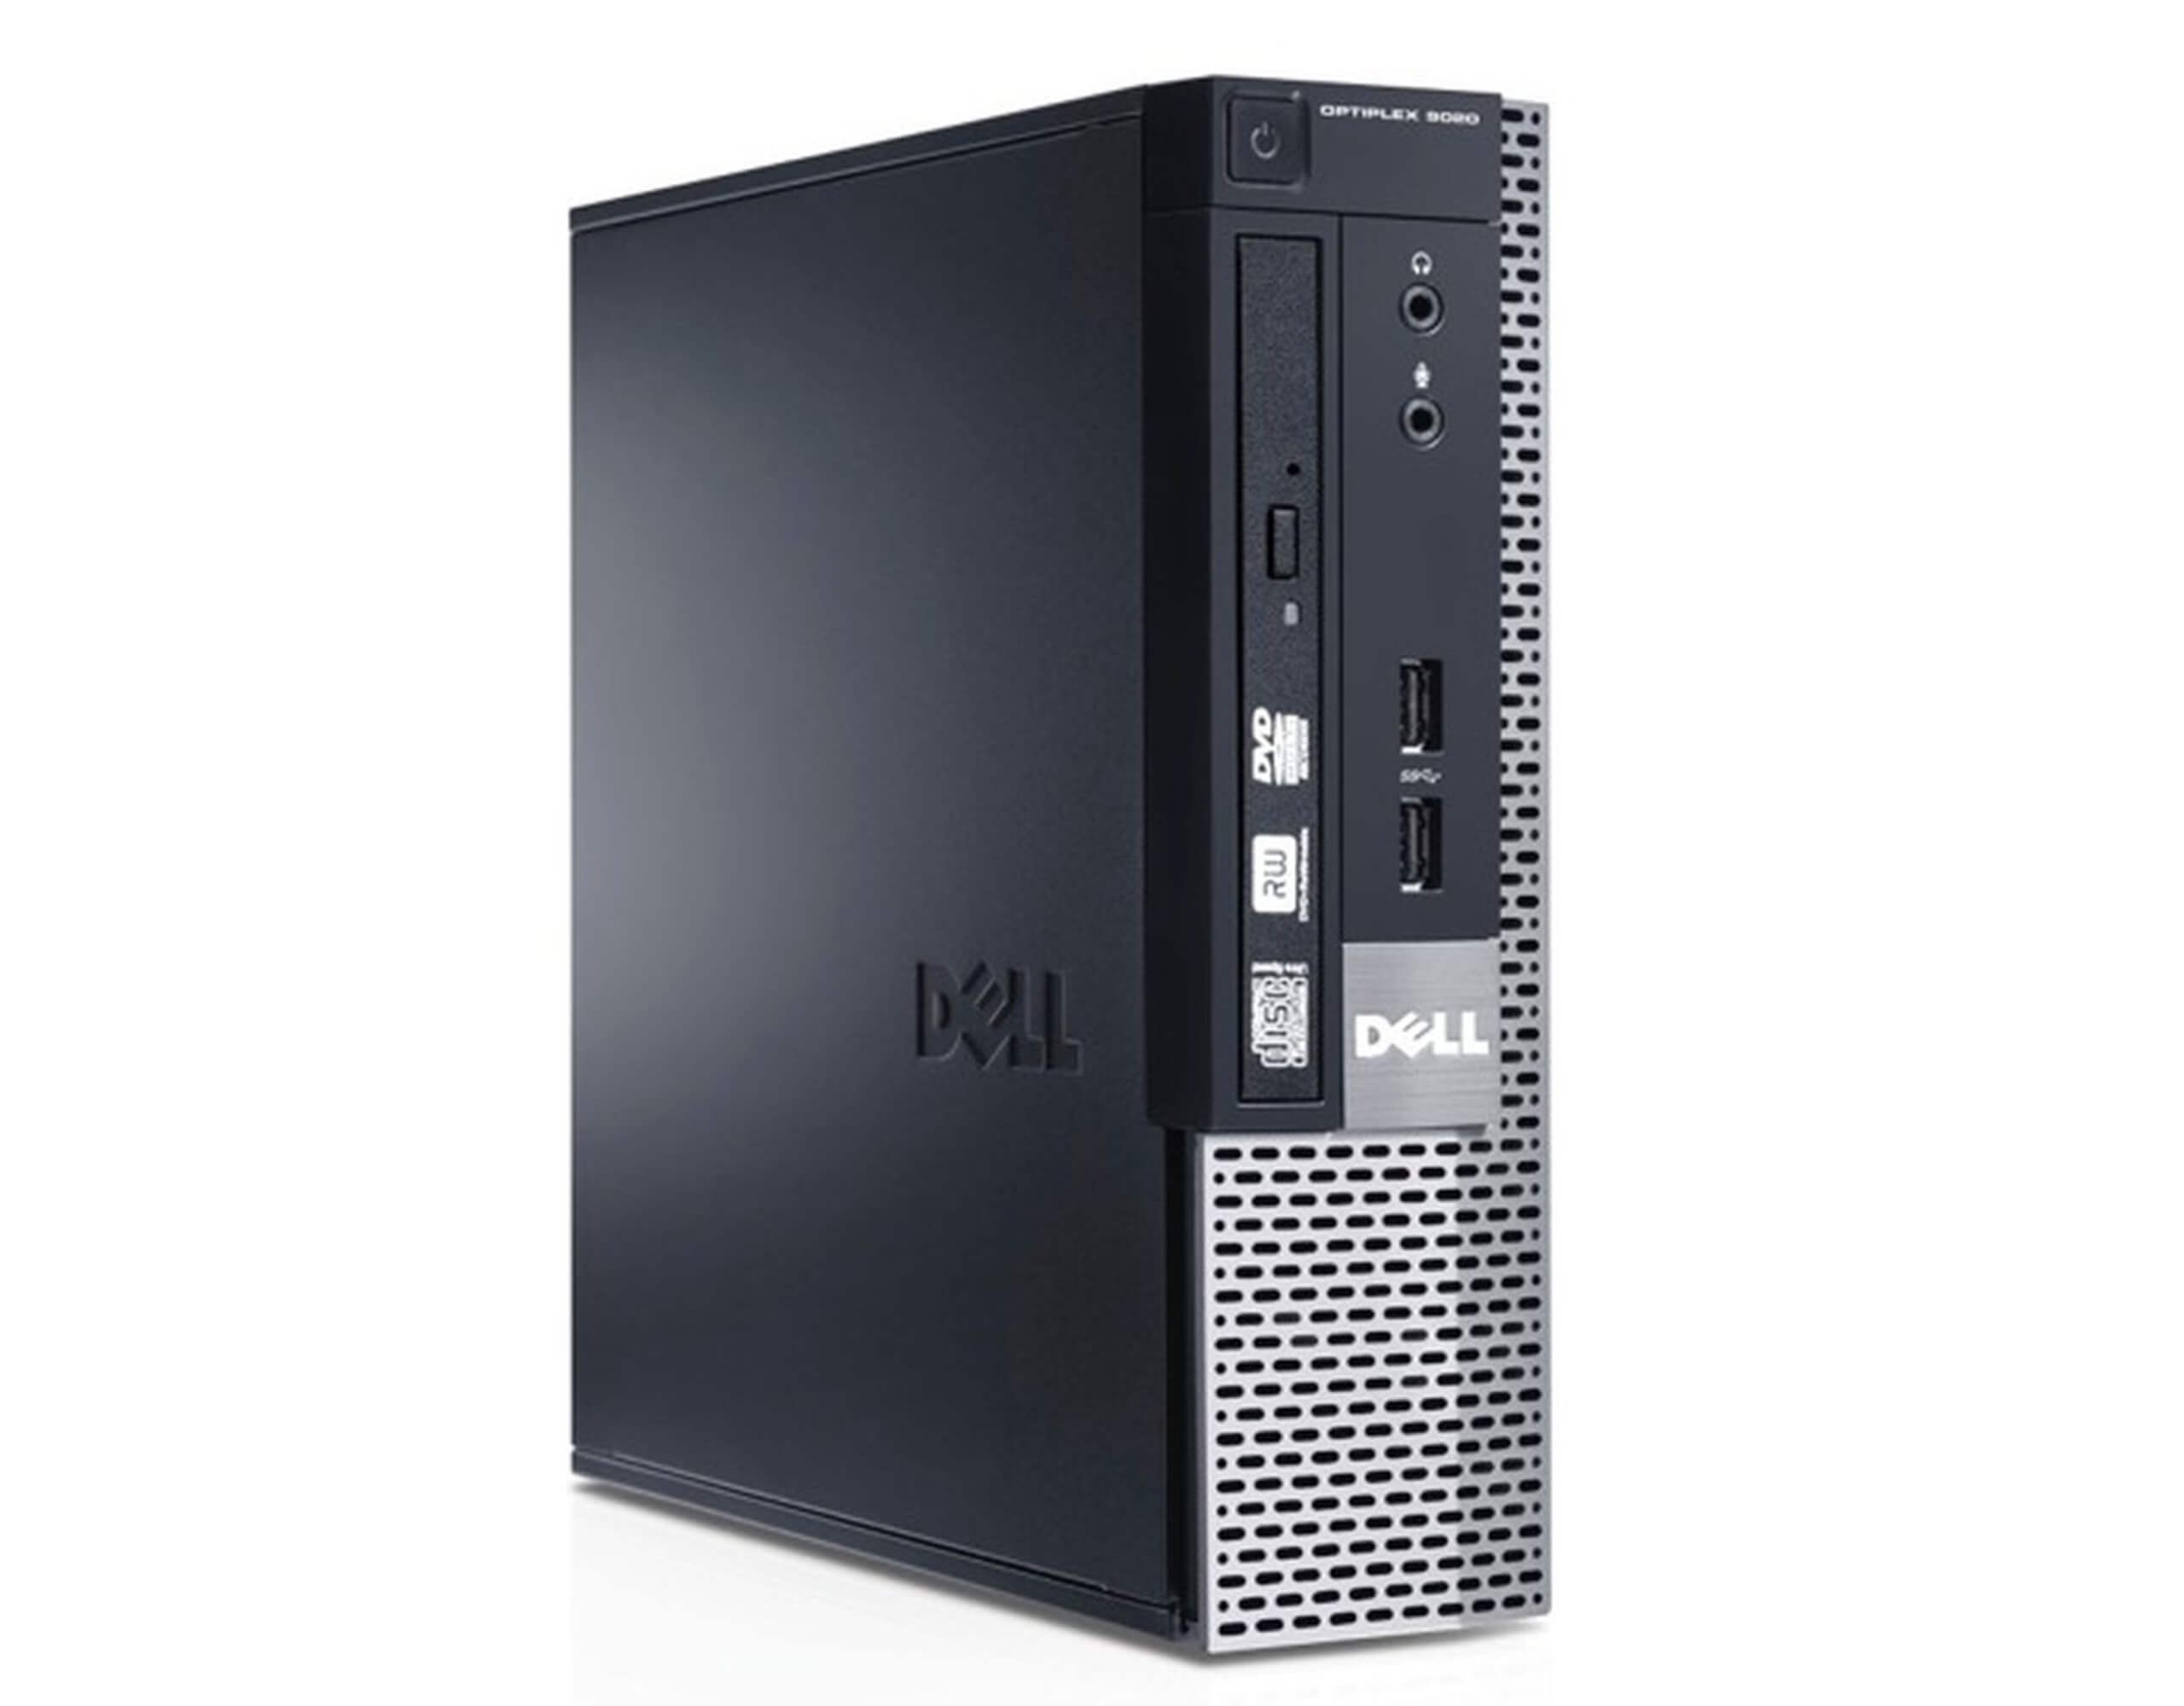 DELL 9020 USFF I5-4590S 3.0 / 8192 MB DDR3 / 128 GB SSD NOWY / DVD-RW / WINDOWS 10 PRO